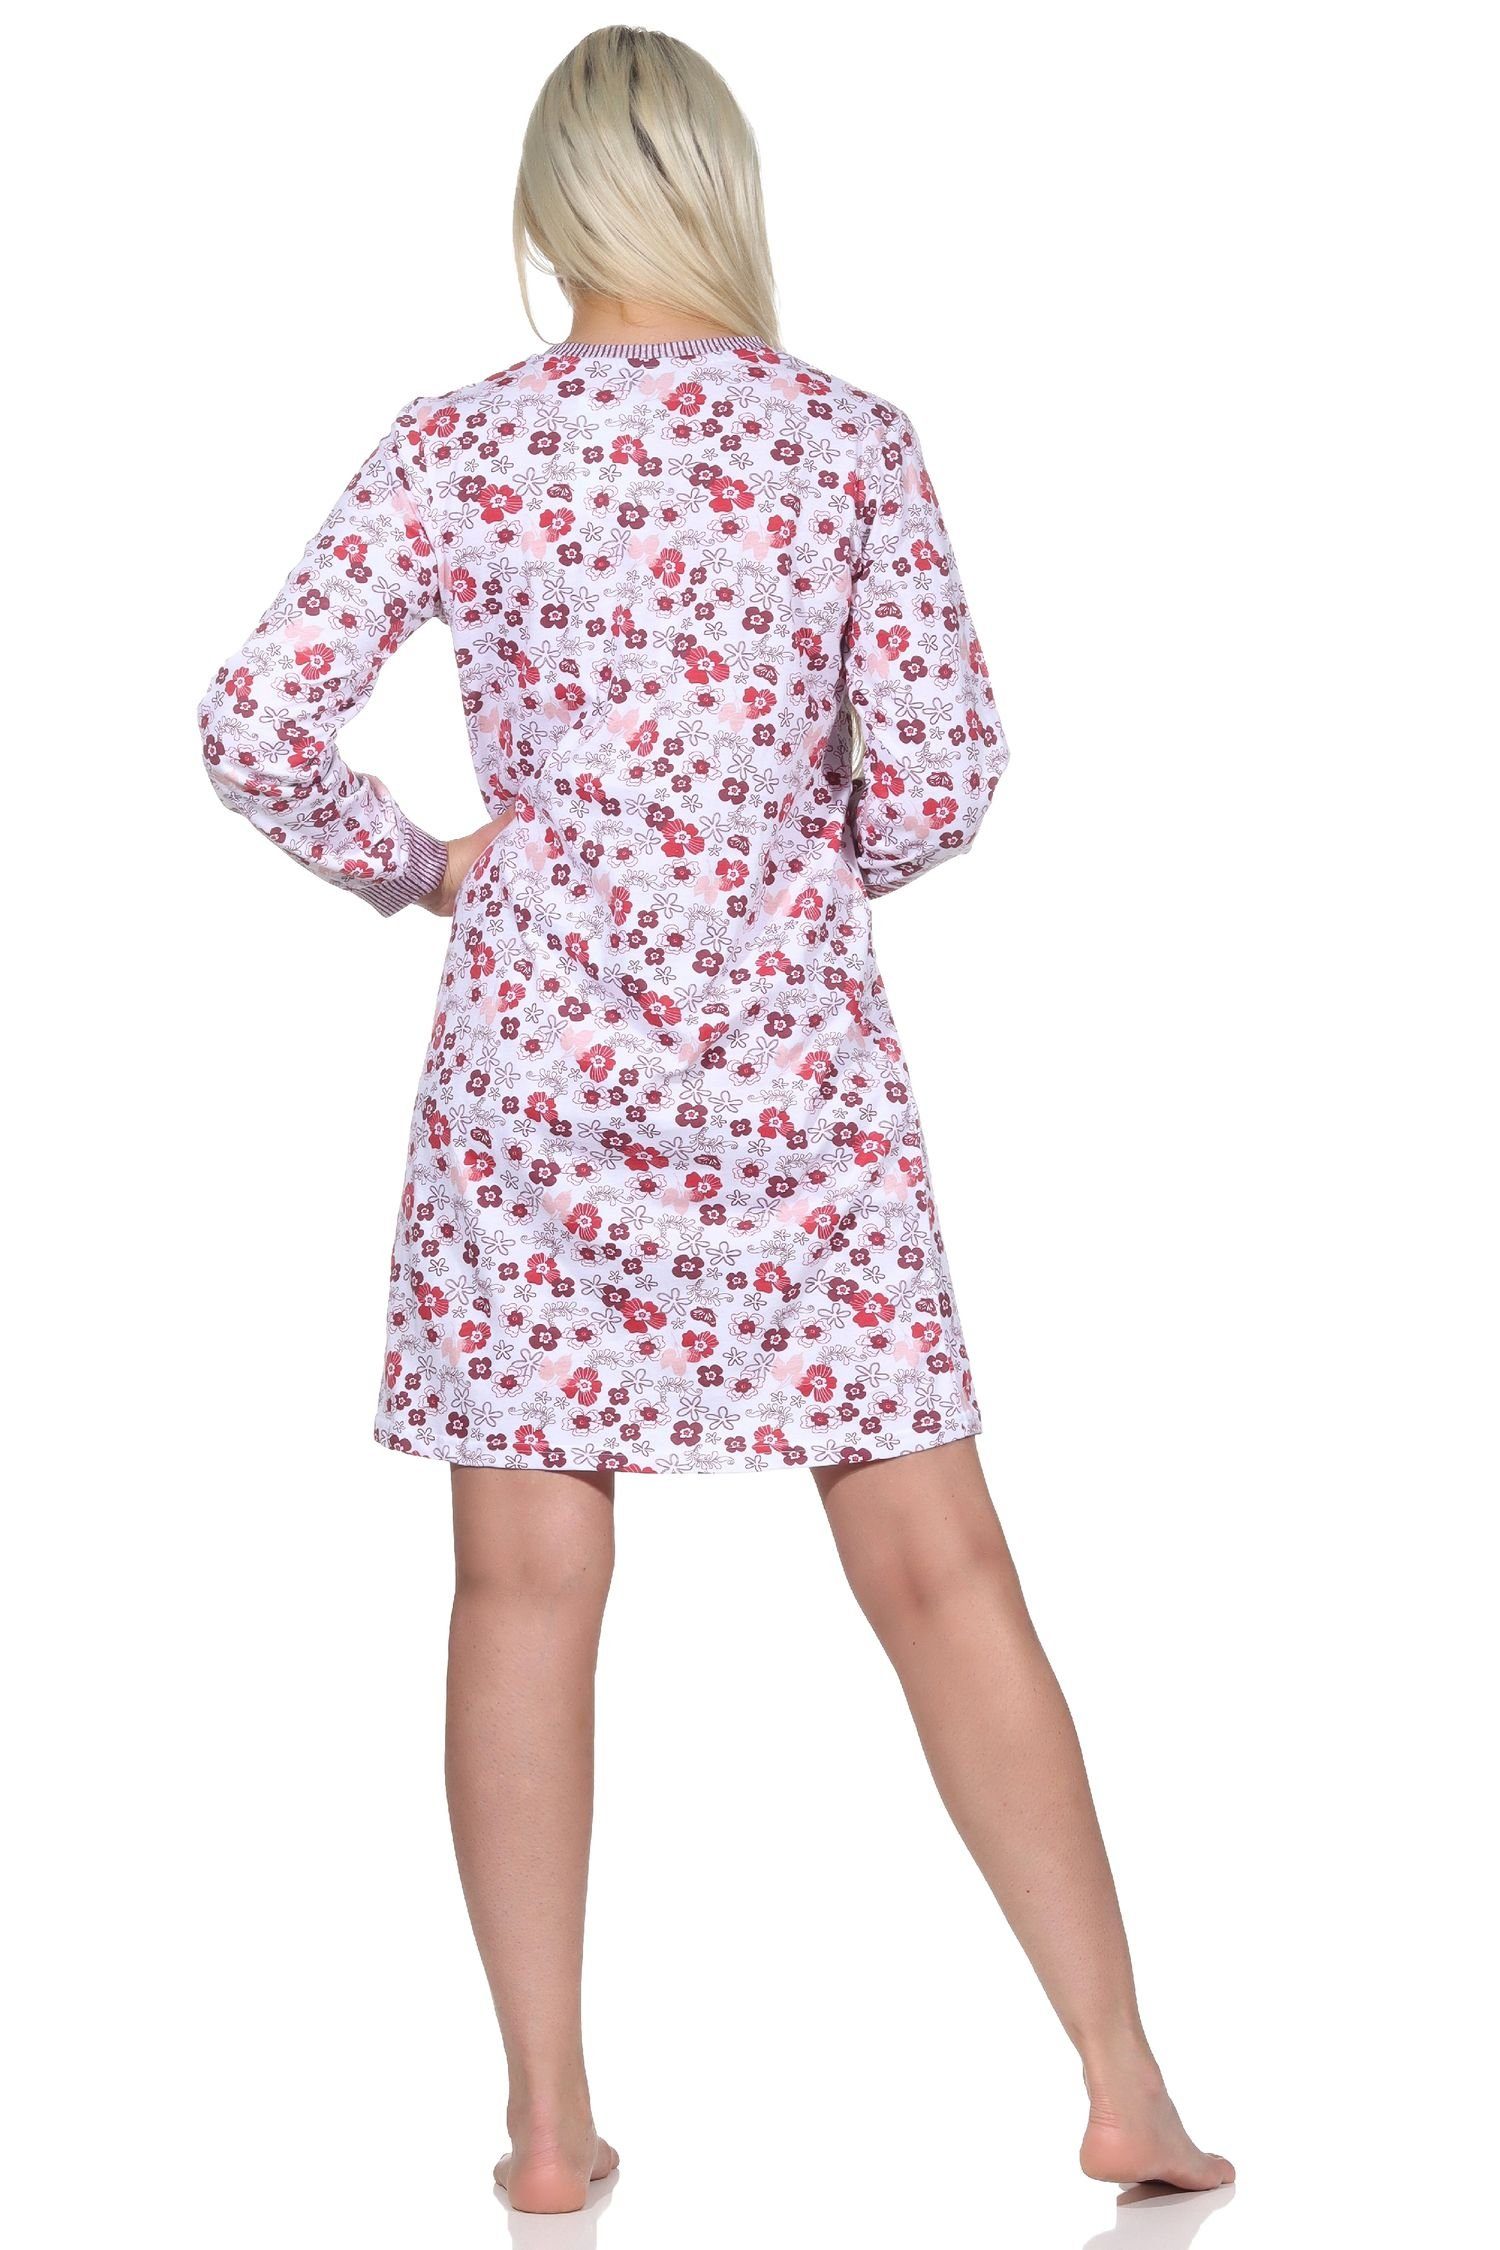 Normann Nachthemd Damen Nachthemd an langarm den in floraler Optik Bündchen beere Ärmeln mit